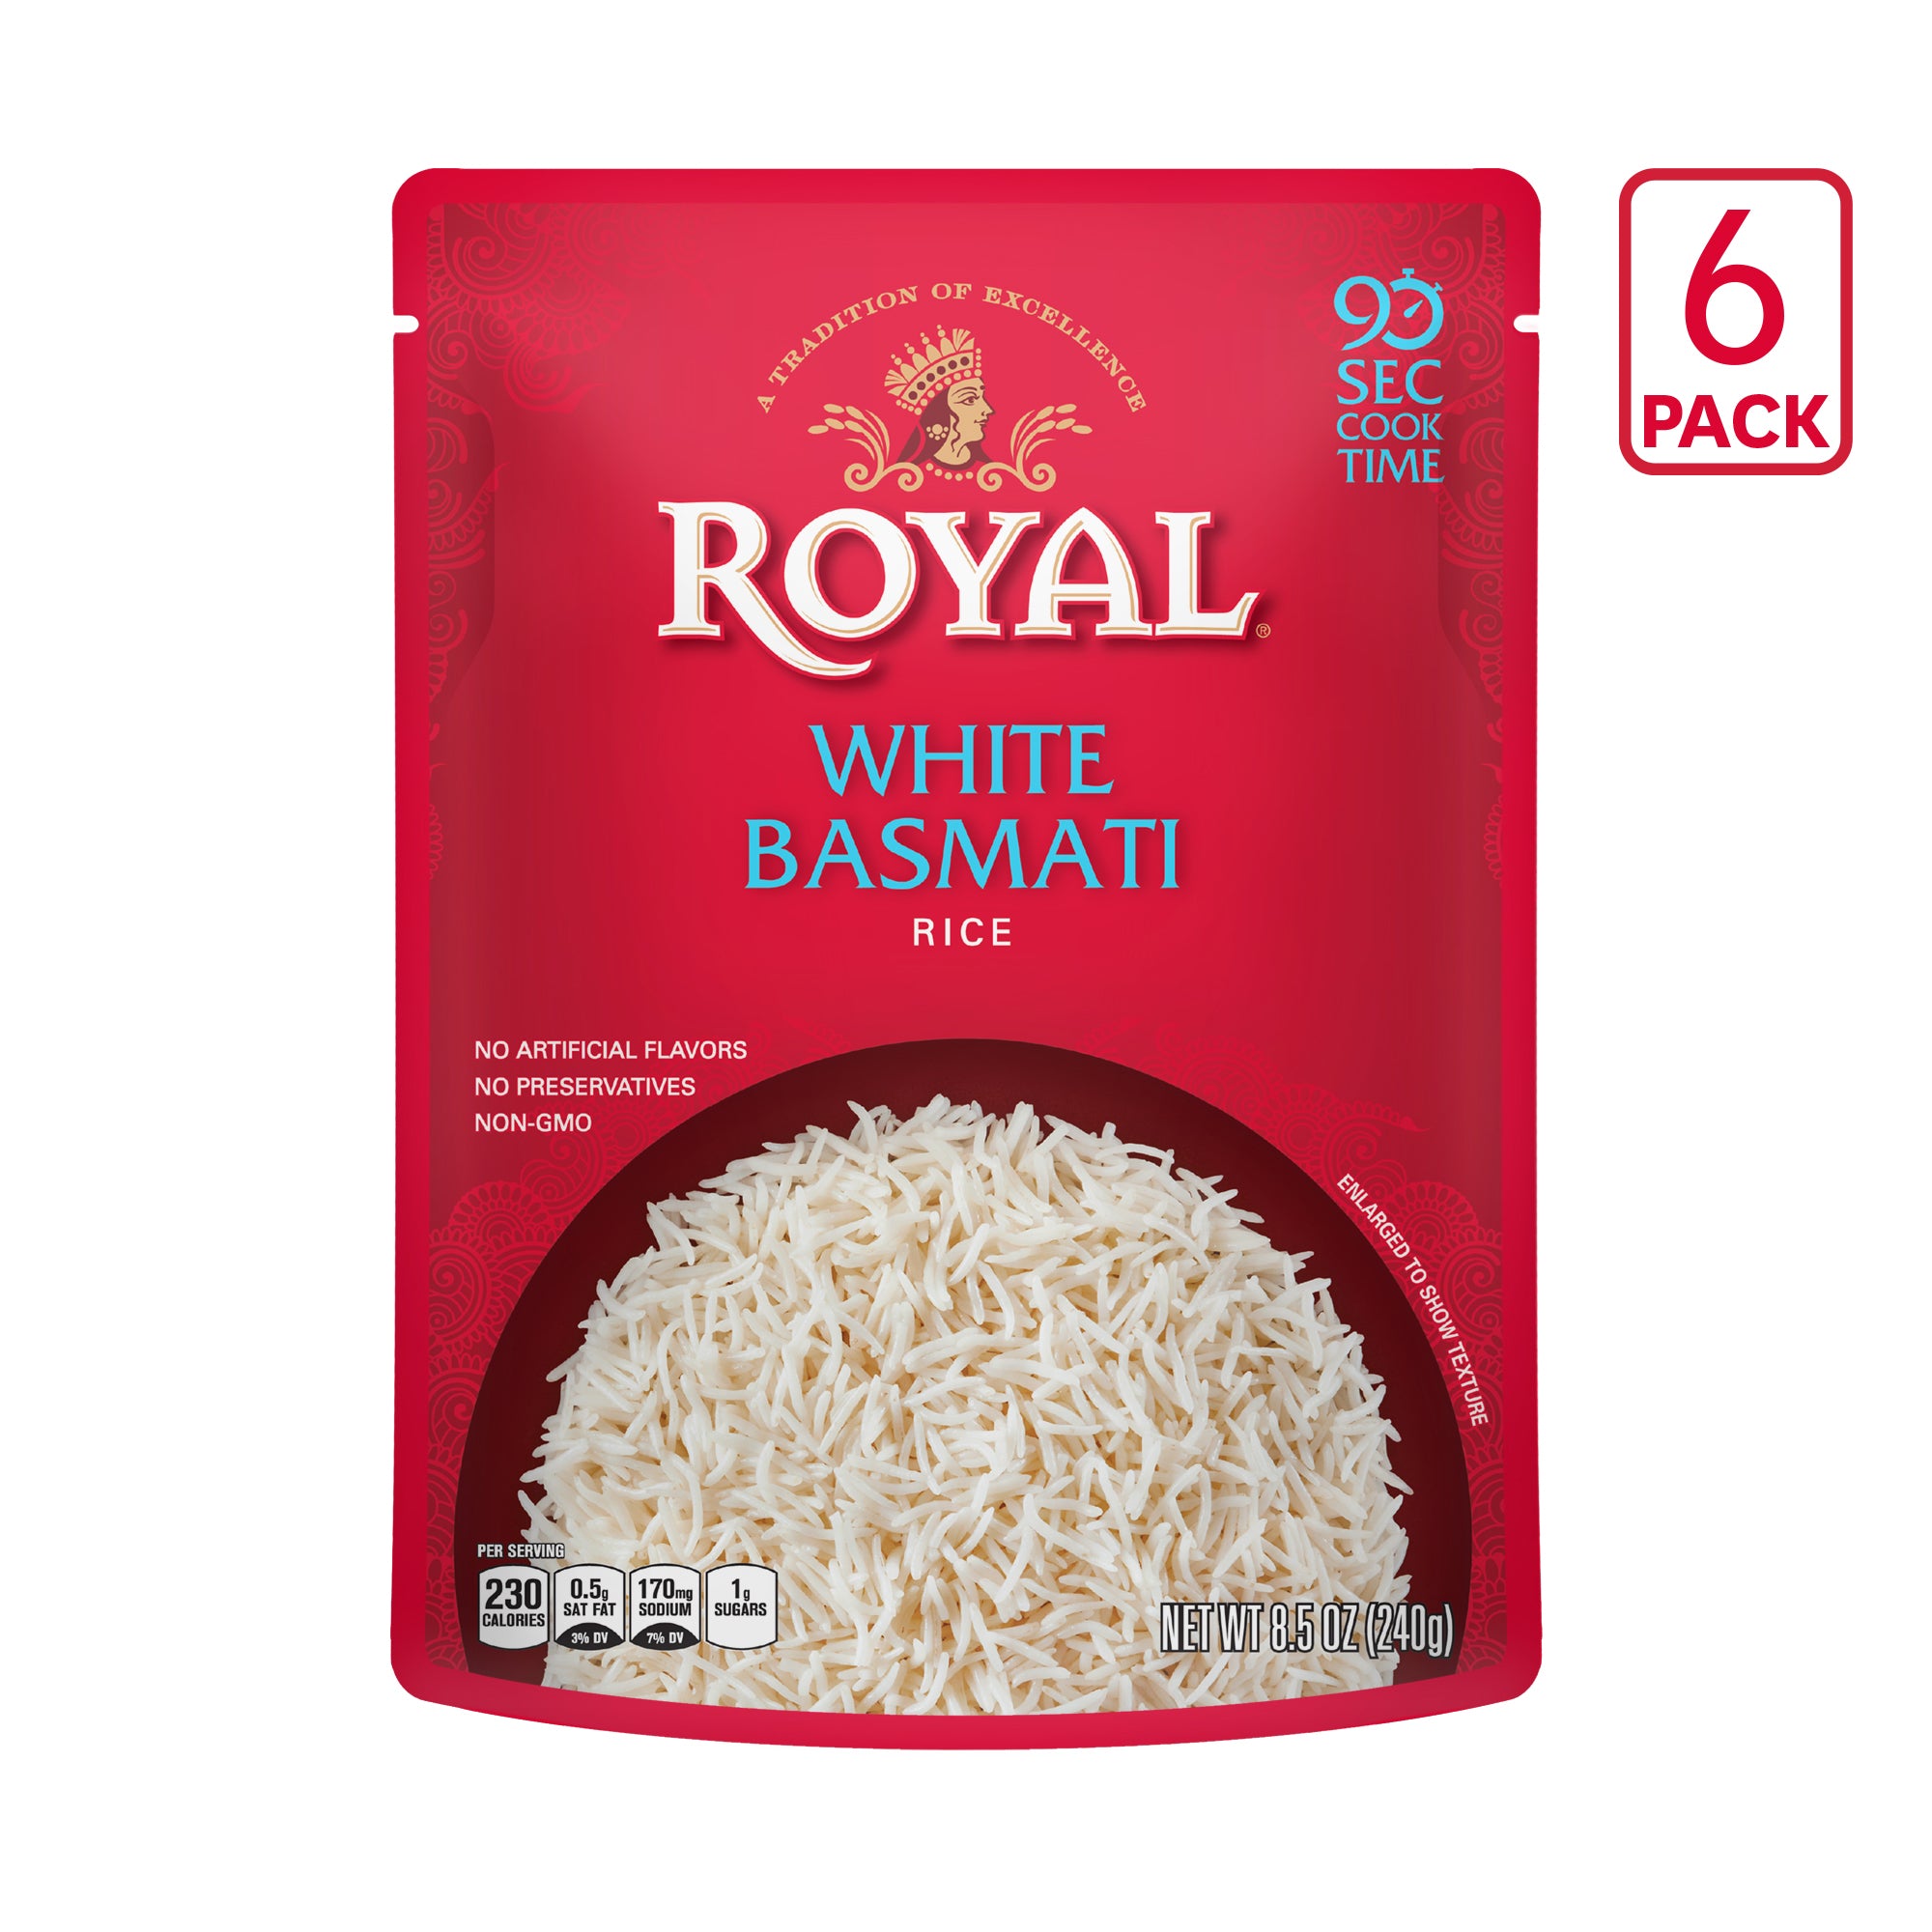 RTH Royal White Basmati 6-pack Ecomm